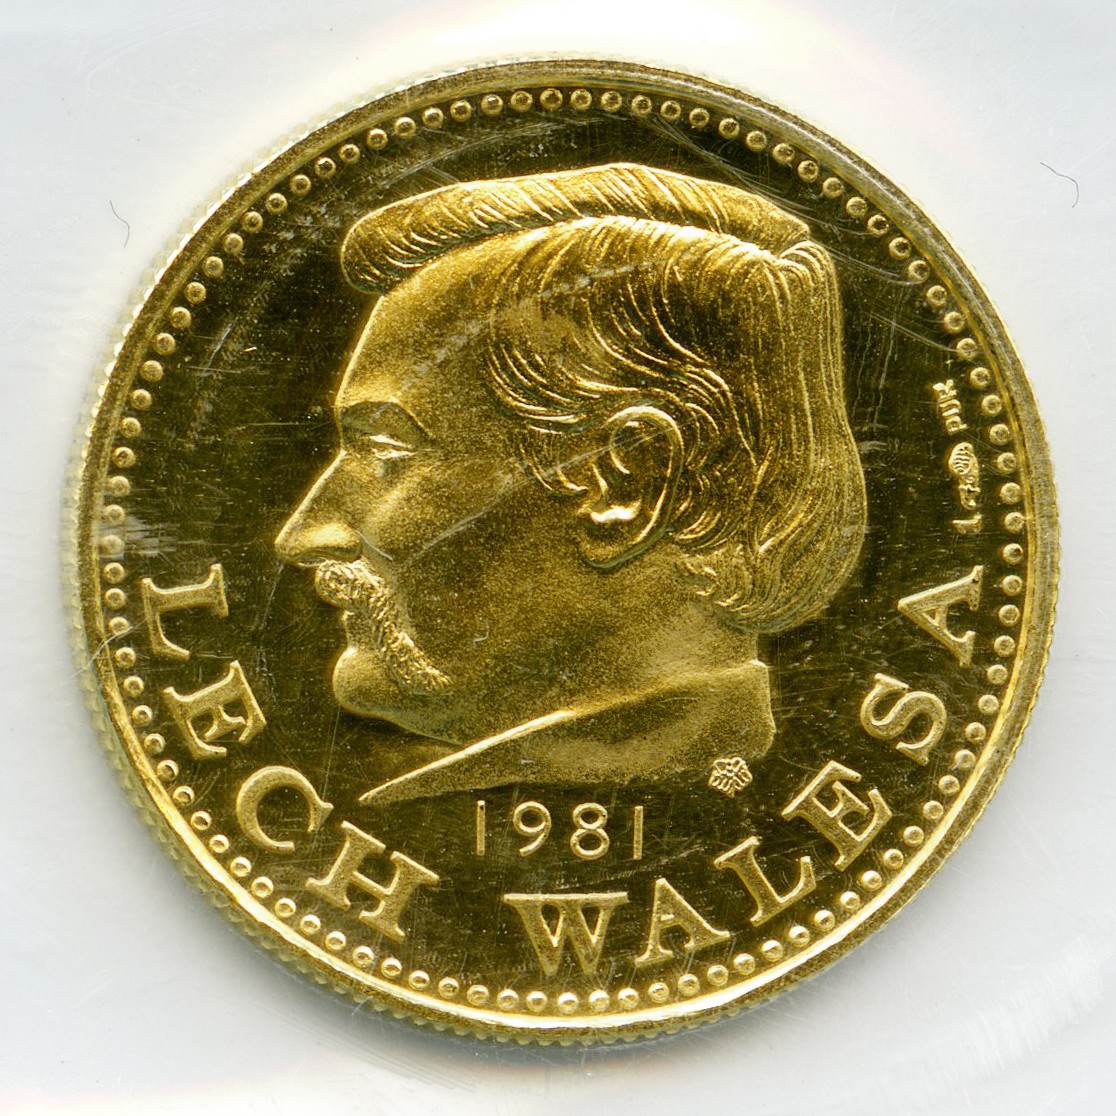 Lech Walesa - Médaille Or - 1981 avers